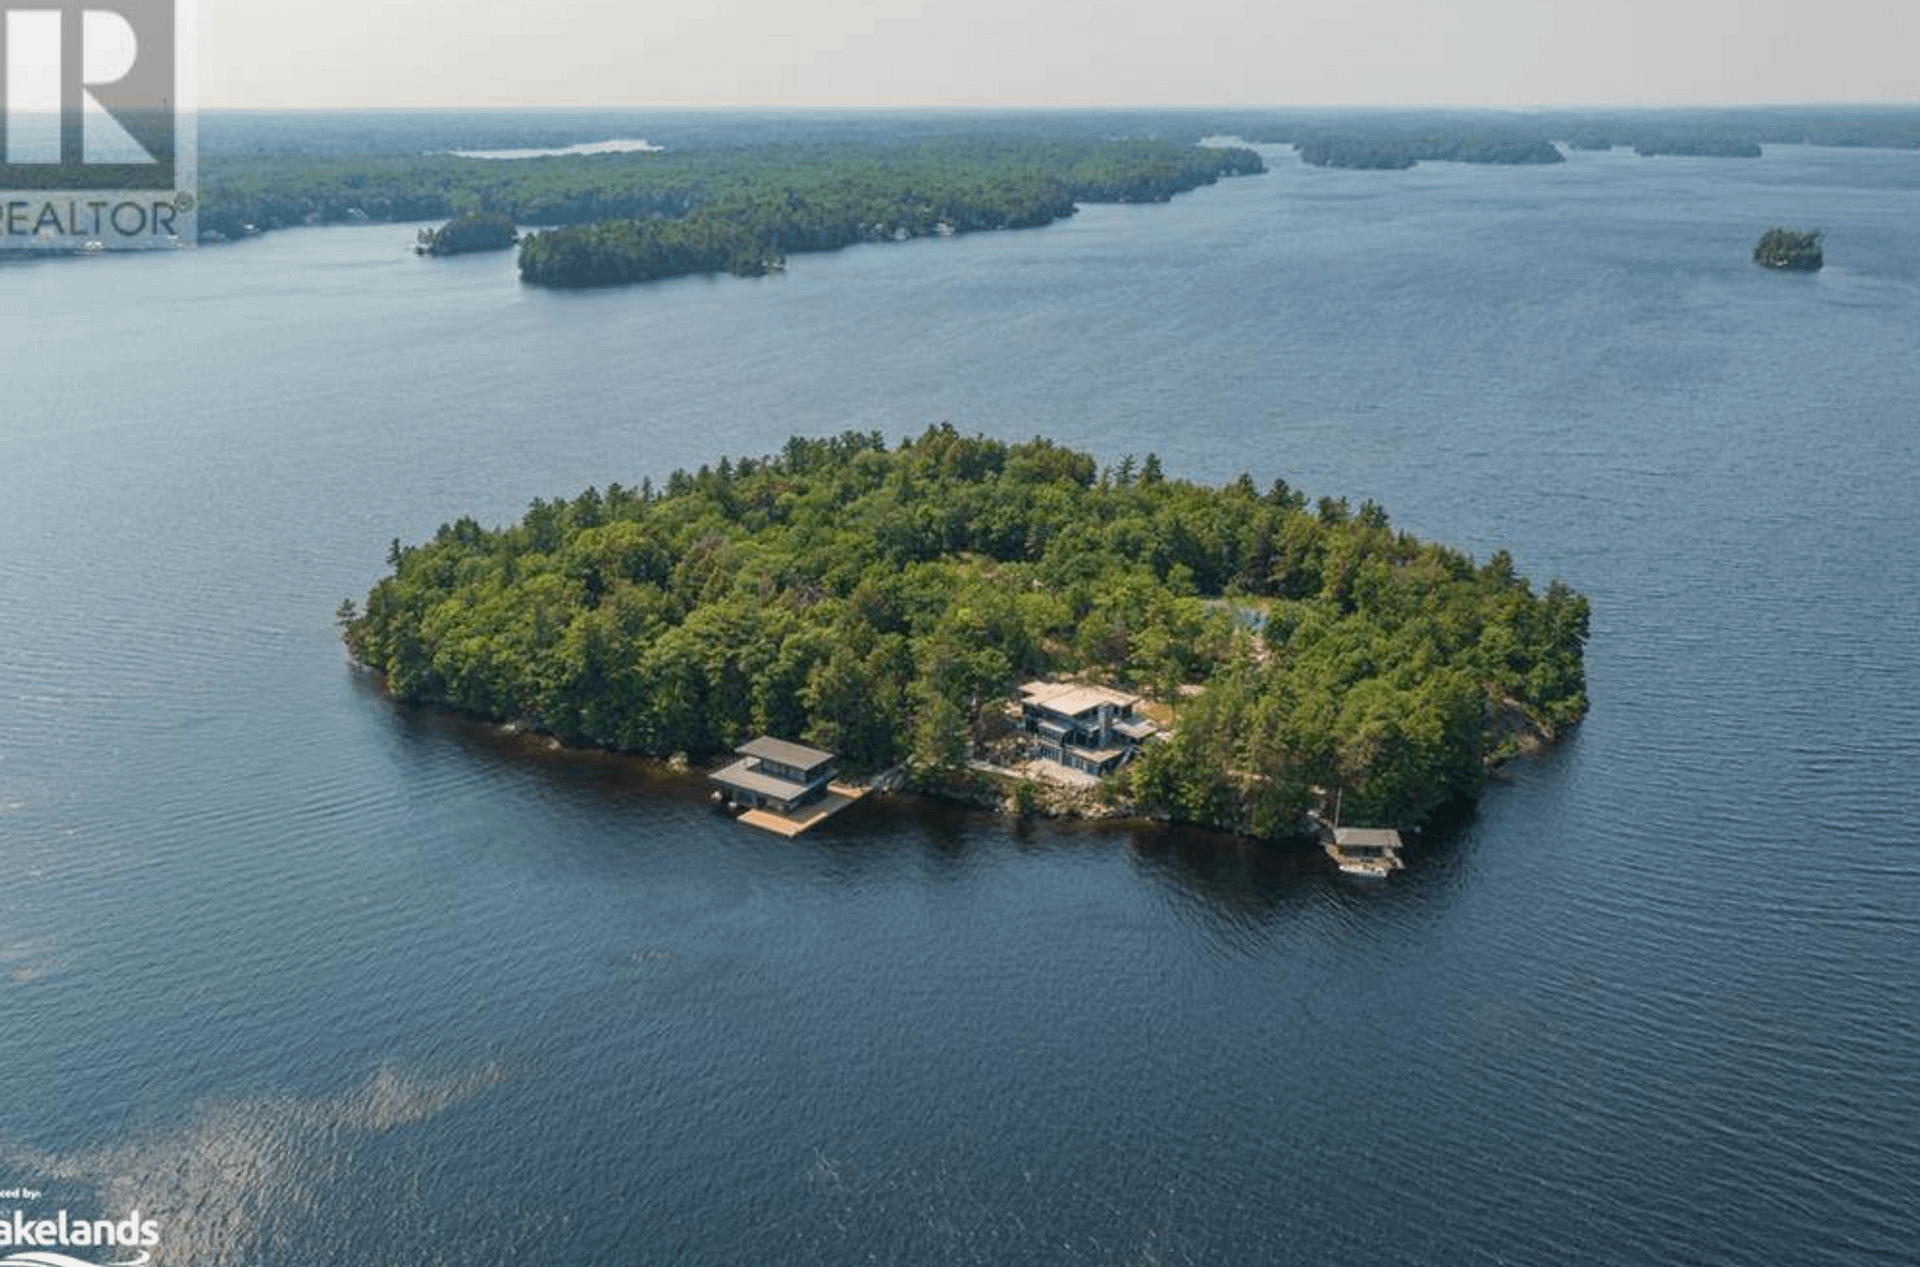 11 Acre Private Island In Ontario, Canada (PHOTOS)